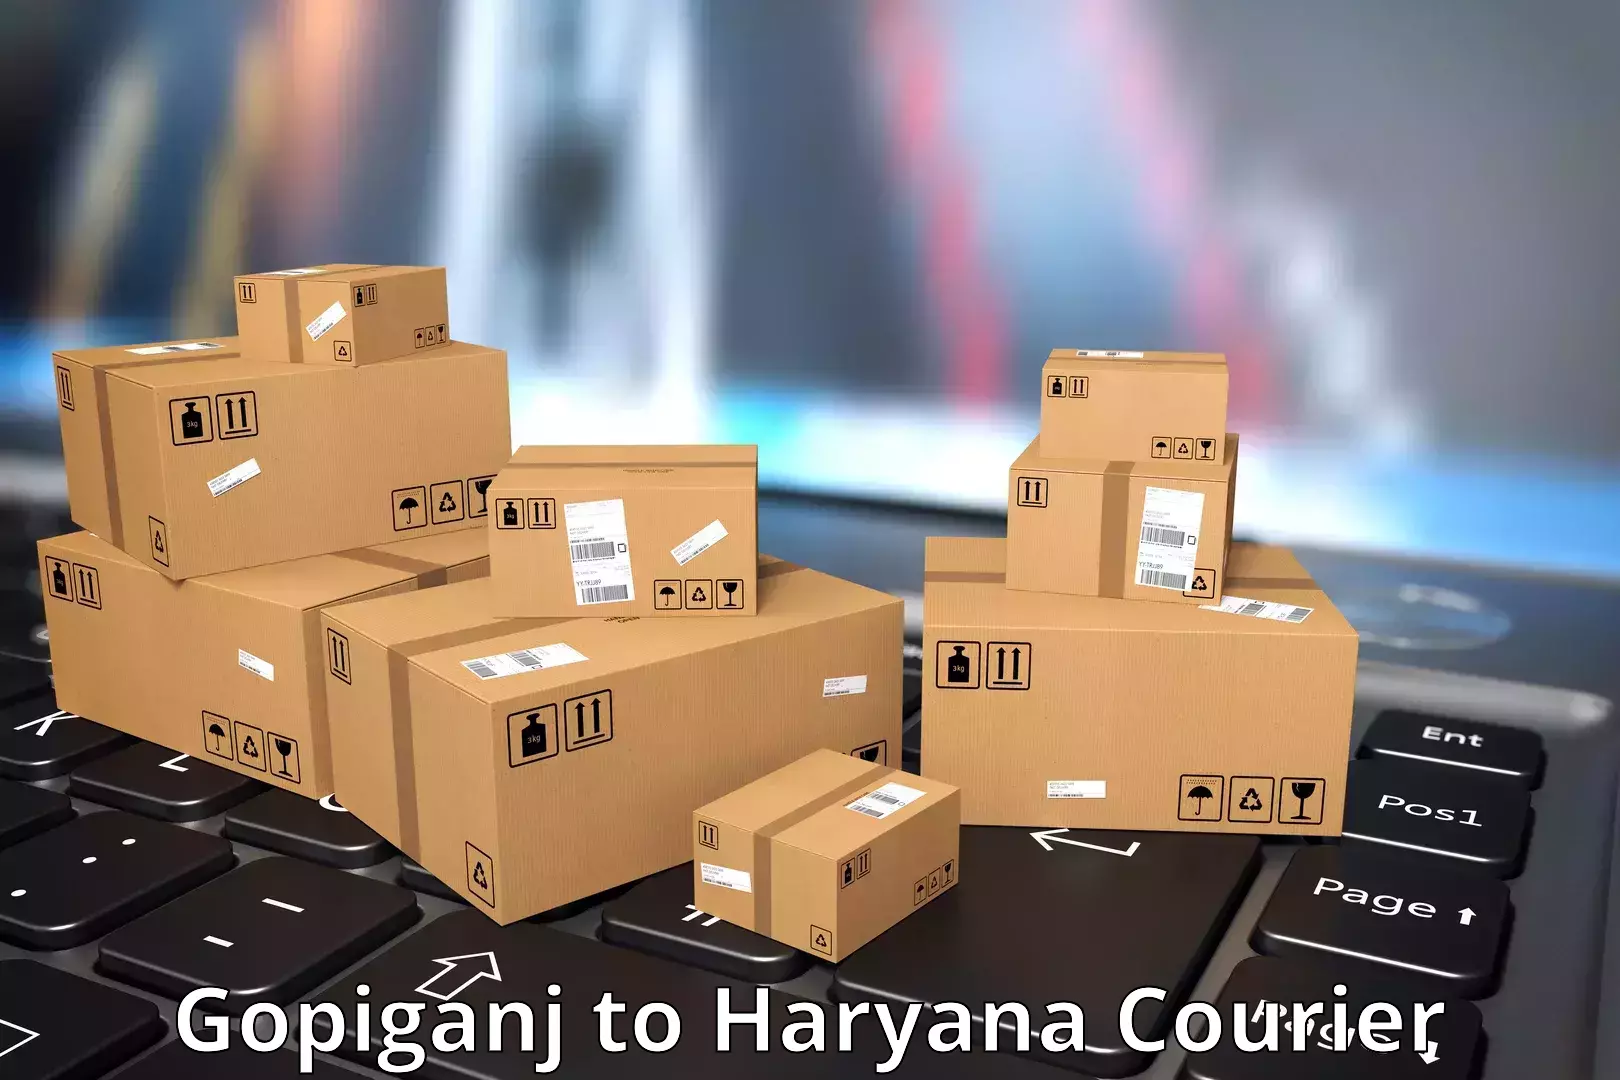 Courier service comparison Gopiganj to Jhajjar